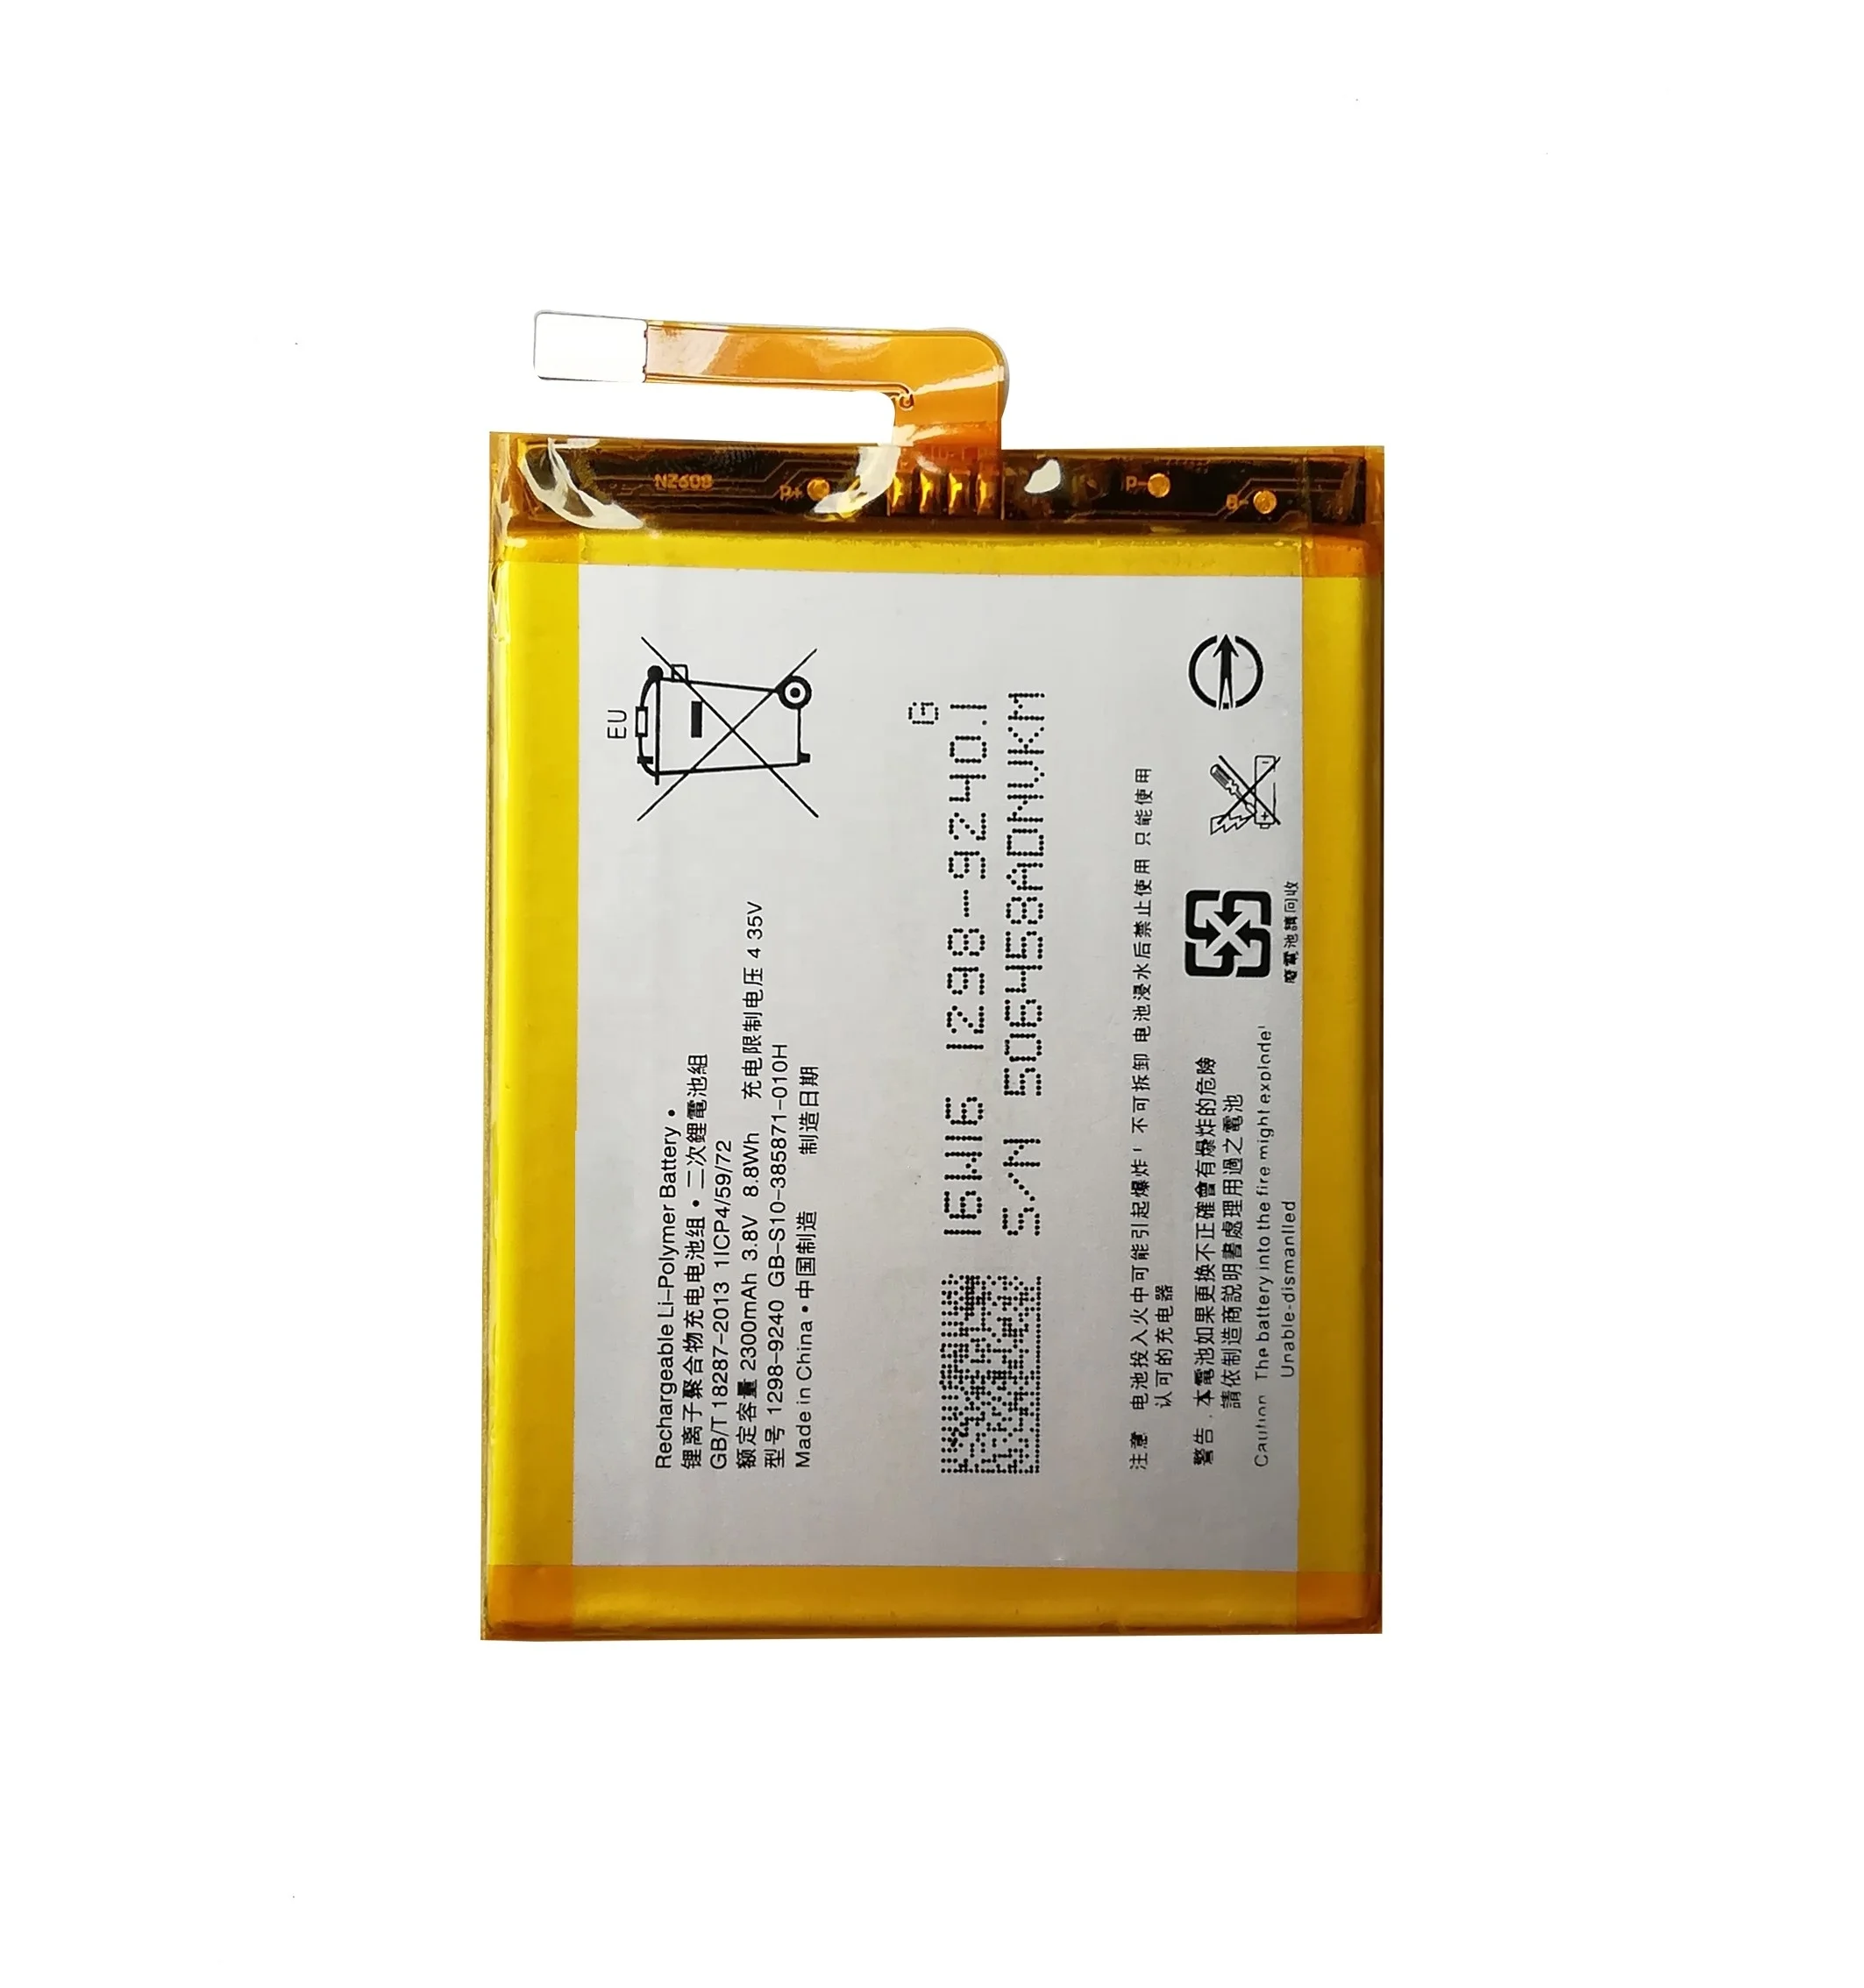 Original Sony Xperia xa 1299-8177 1299-8177 .1c gb-s10-385871-010h batería BATTERY